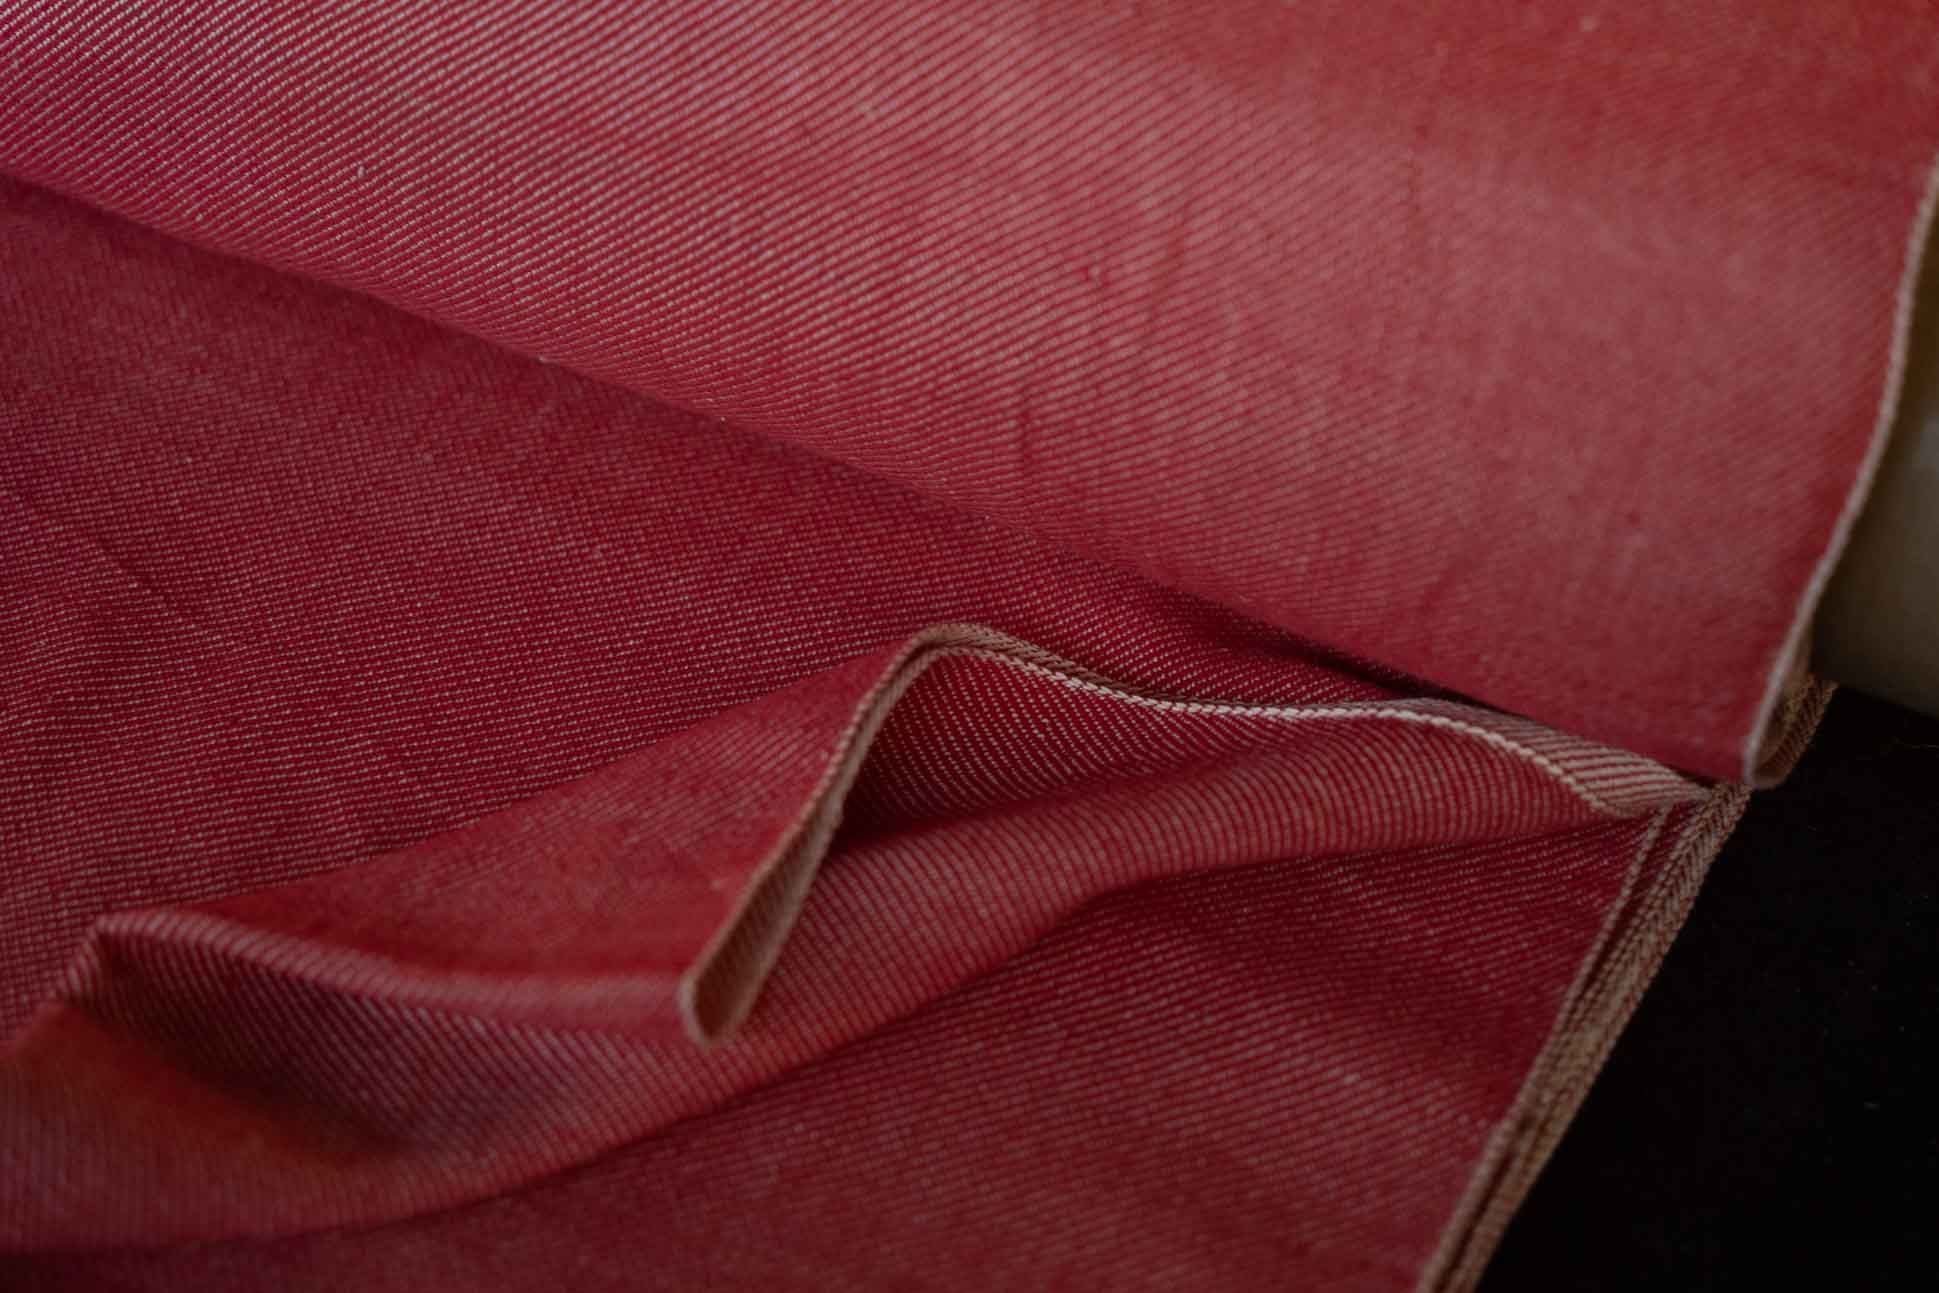 Handloom Red Denim Fabric